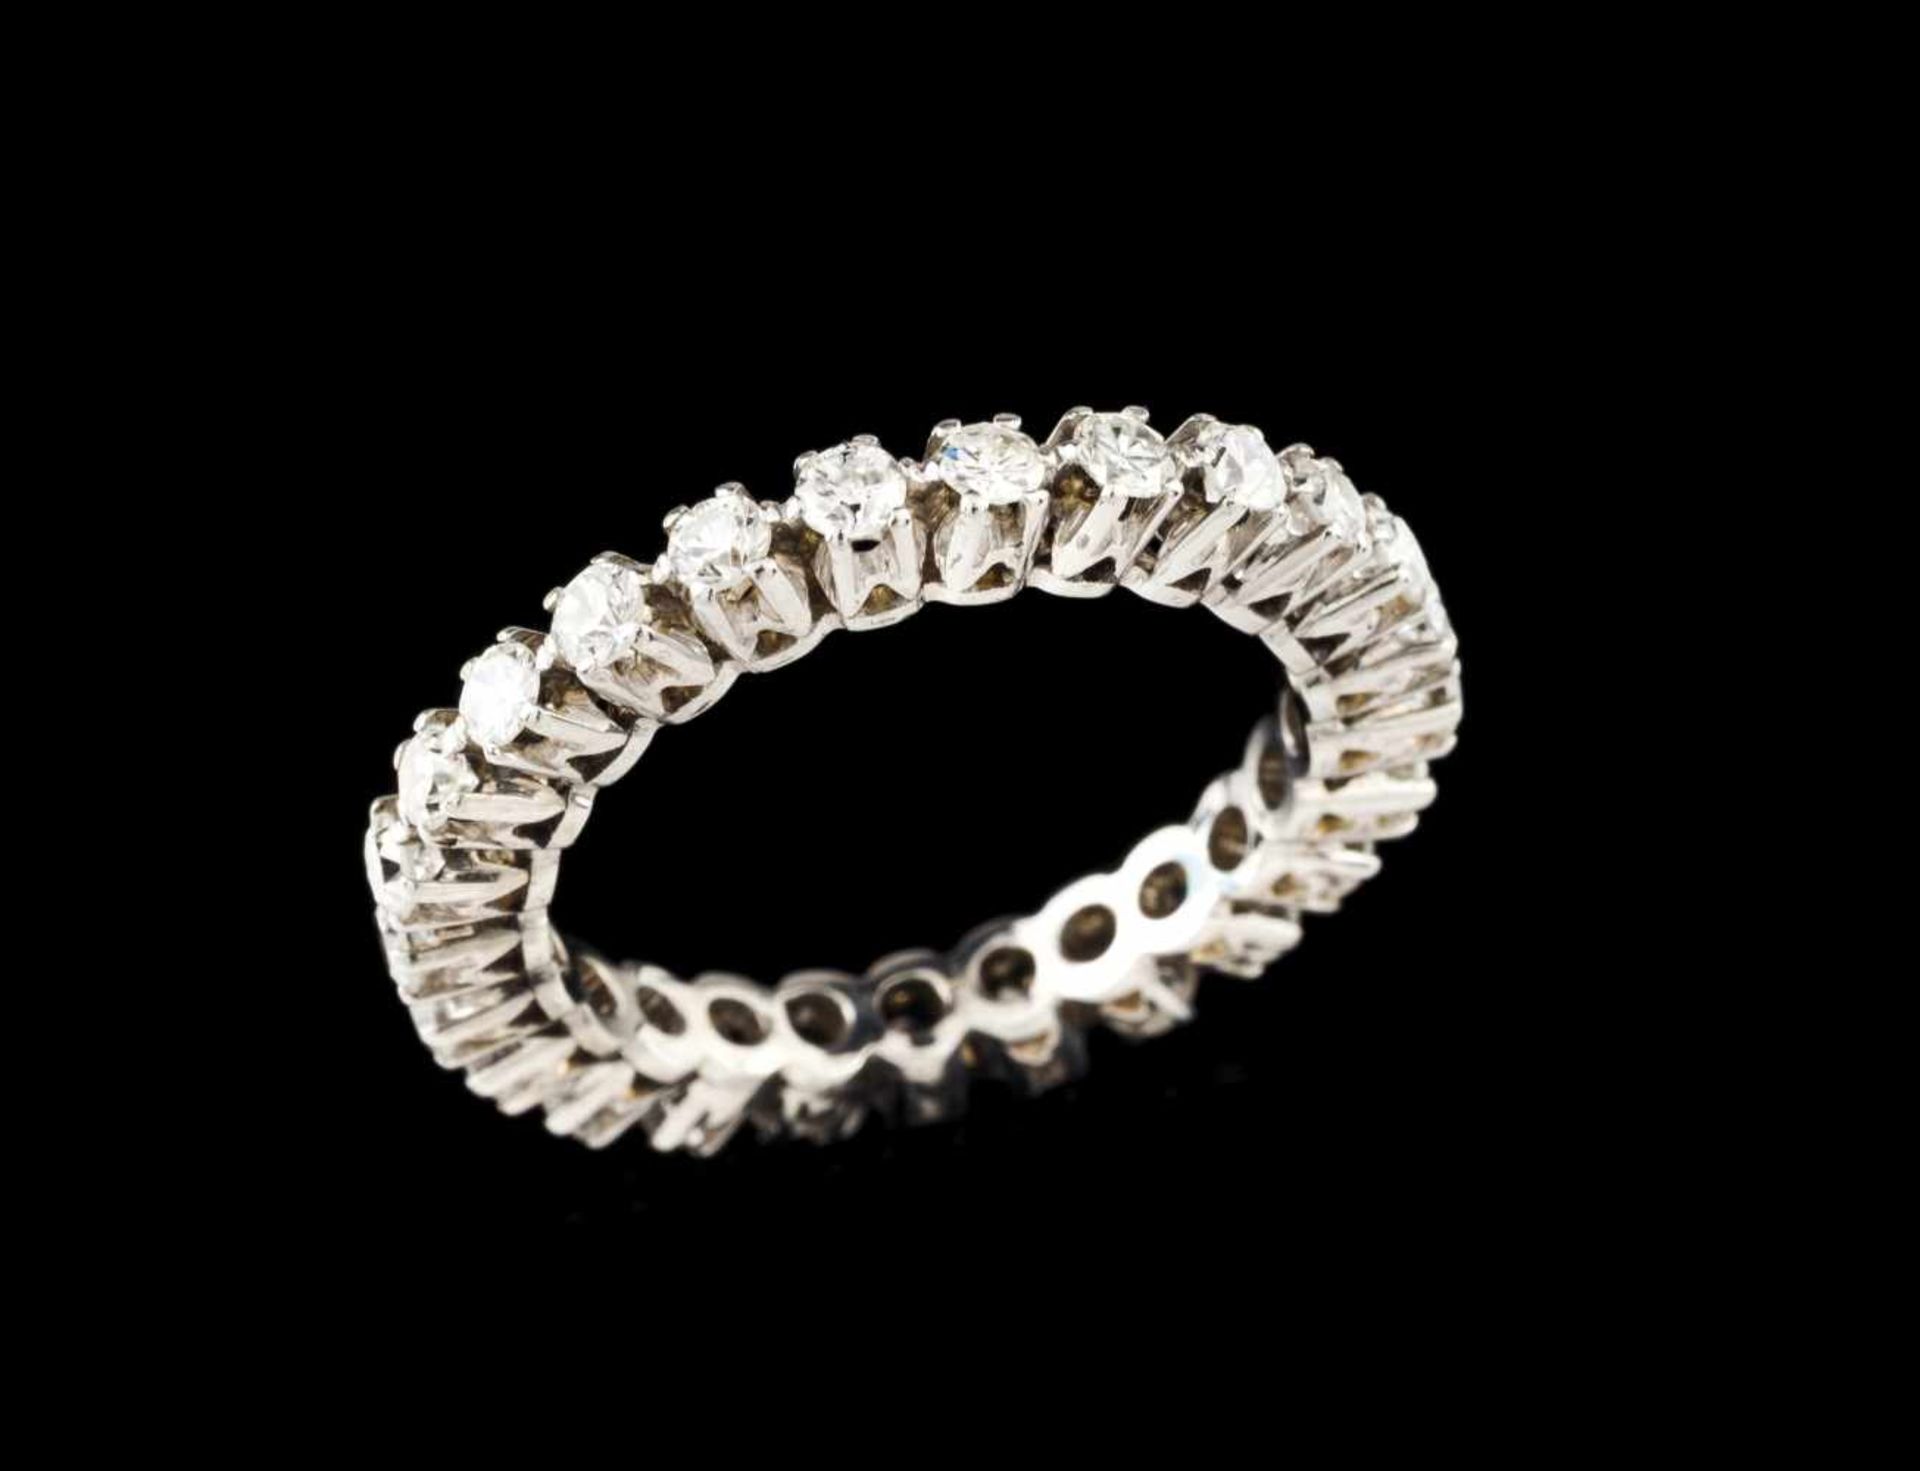 A ring bandGoldSet with 25 brilliant cut diamonds (ca.1.60ct)Oporto hallmark, Ant 800/000 for 1938-